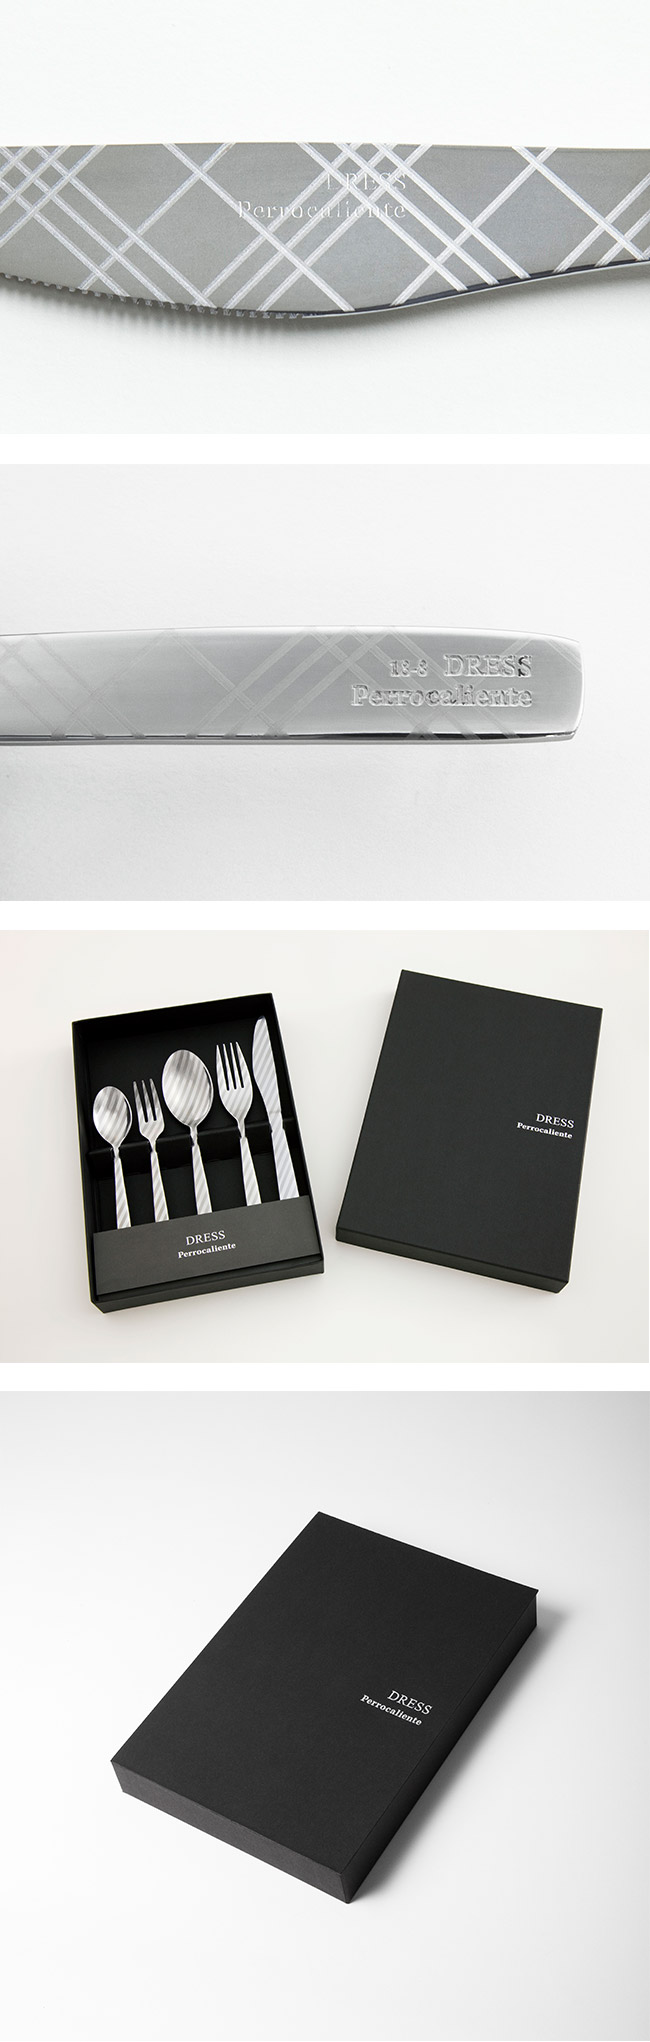 Perrocaliente Dress Gift Set 銀色盒裝餐具組 晚餐組 方格 (湯匙+叉子+餐刀)